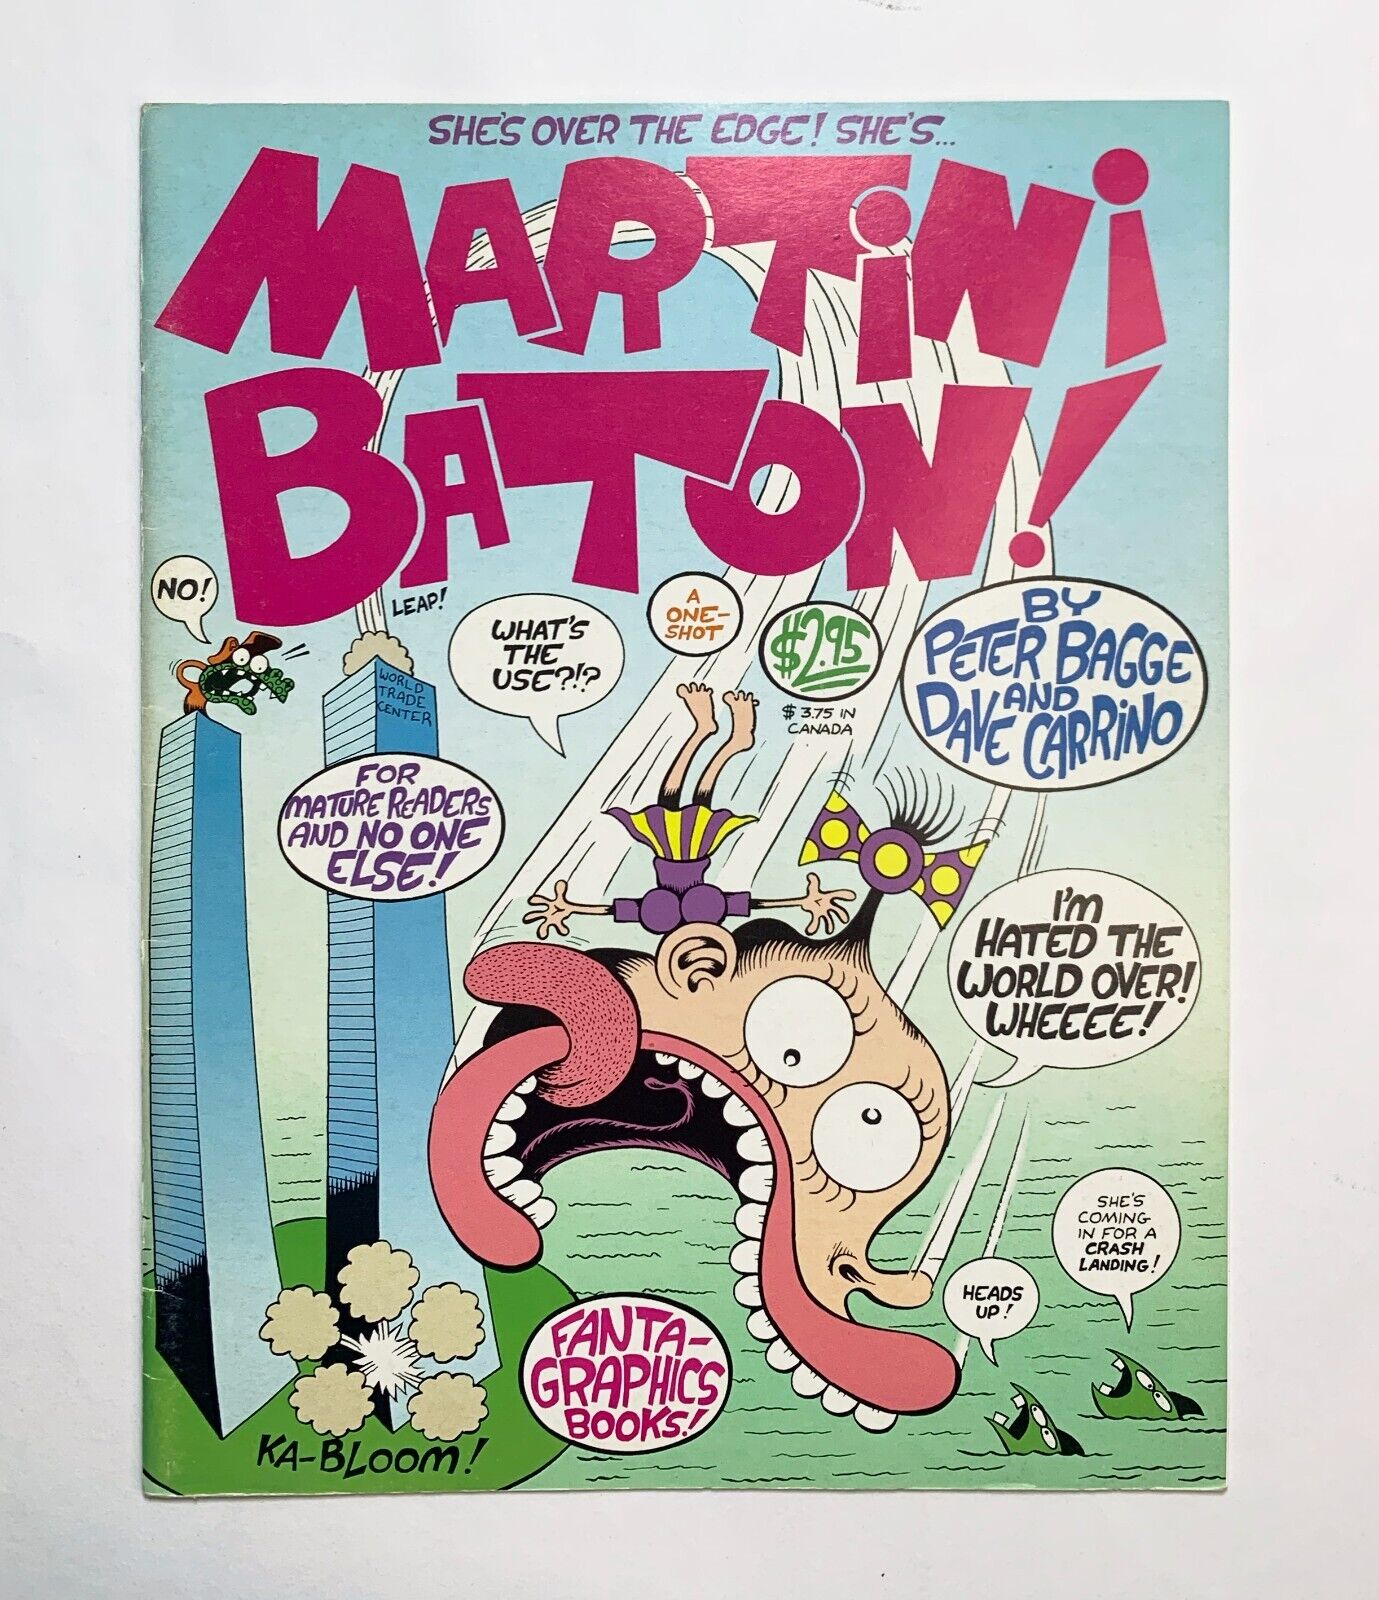 Martini Baton by Peter Bagge & Dave Carrino